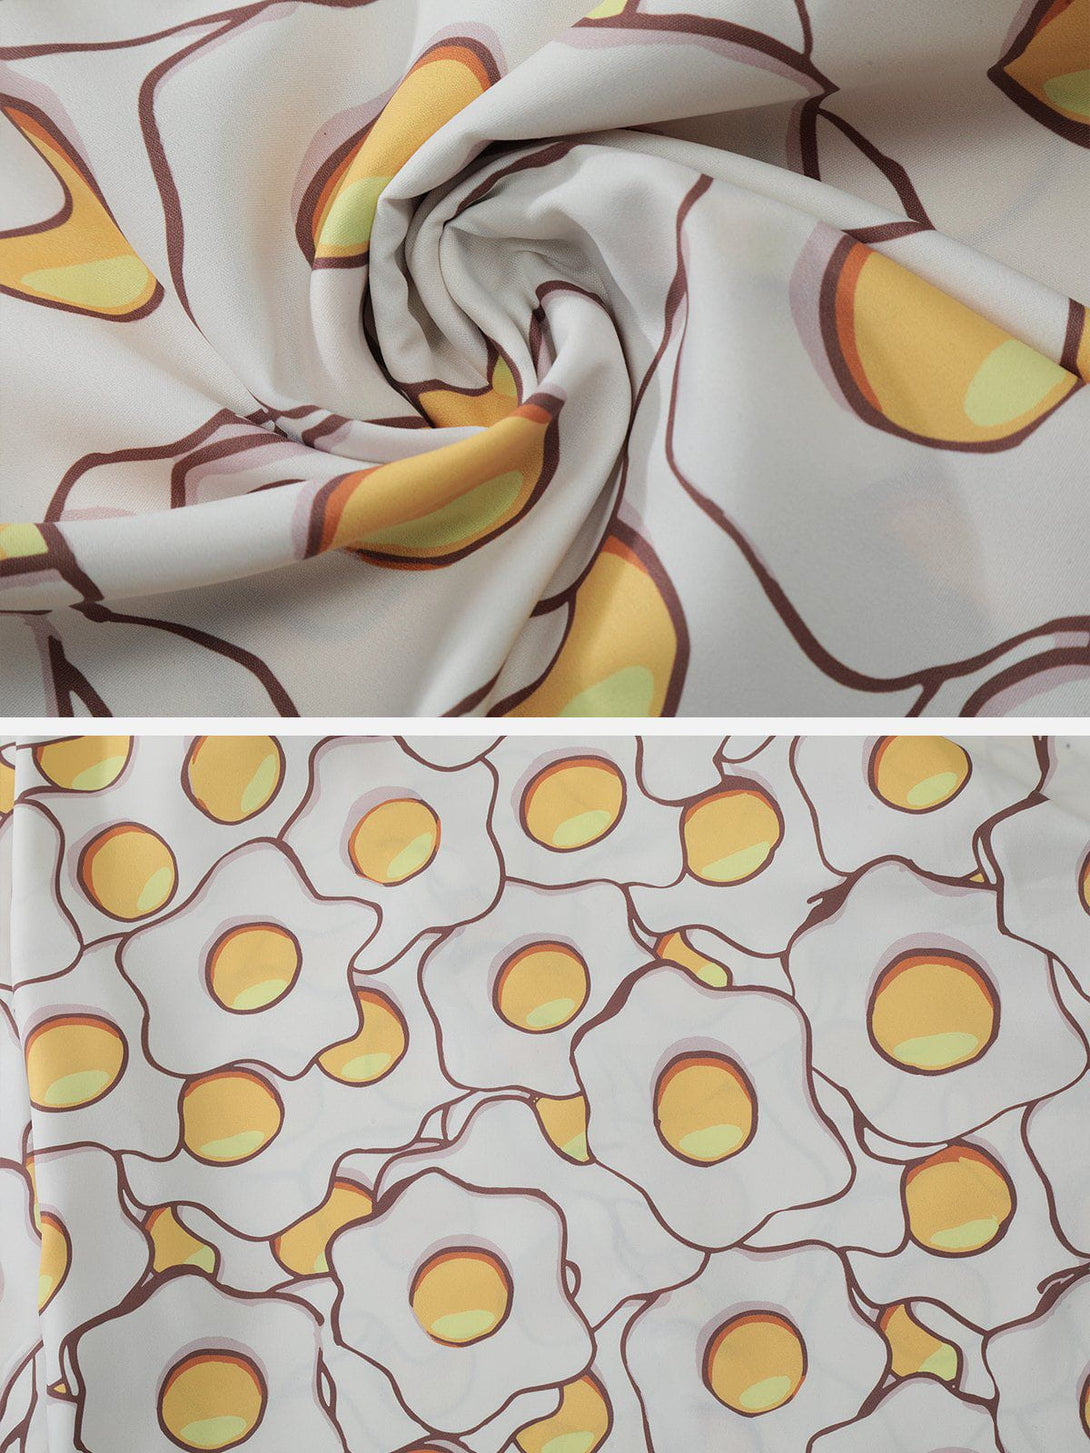 Majesda® - Fried Eggs Element Short Sleeve Shirts outfit ideas streetwear fashion